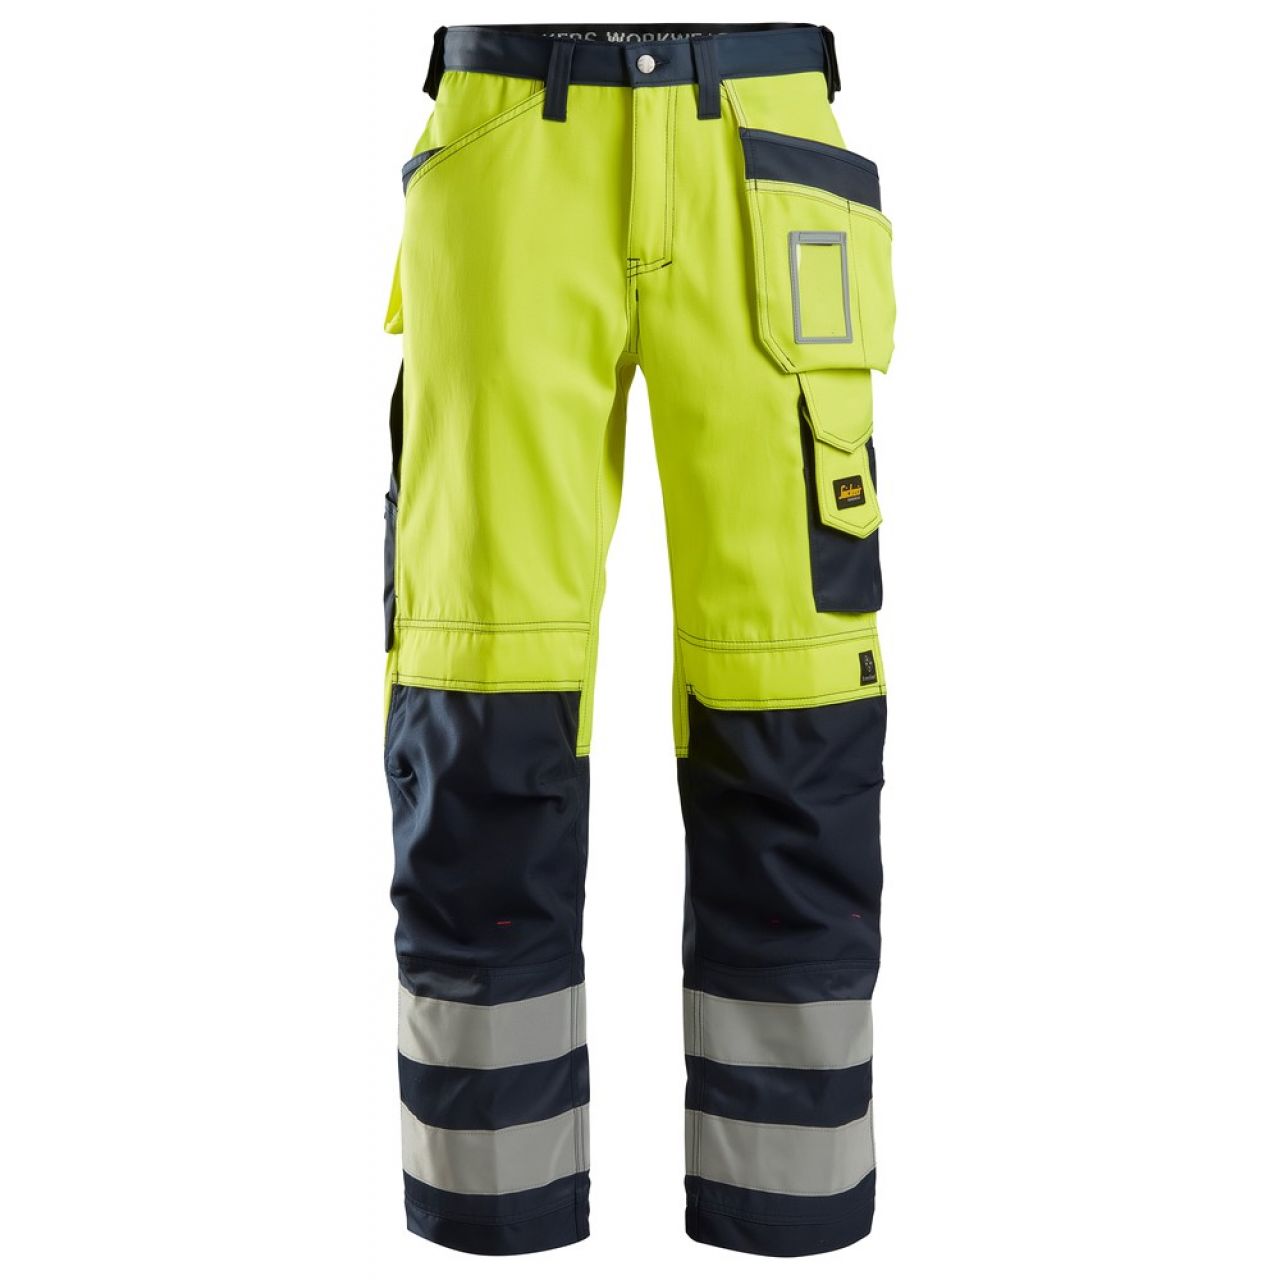 3233 Pantalones largos de trabajo de alta visibilidad clase 2 con bolsillos flotantes amarillo-azul marino talla 48